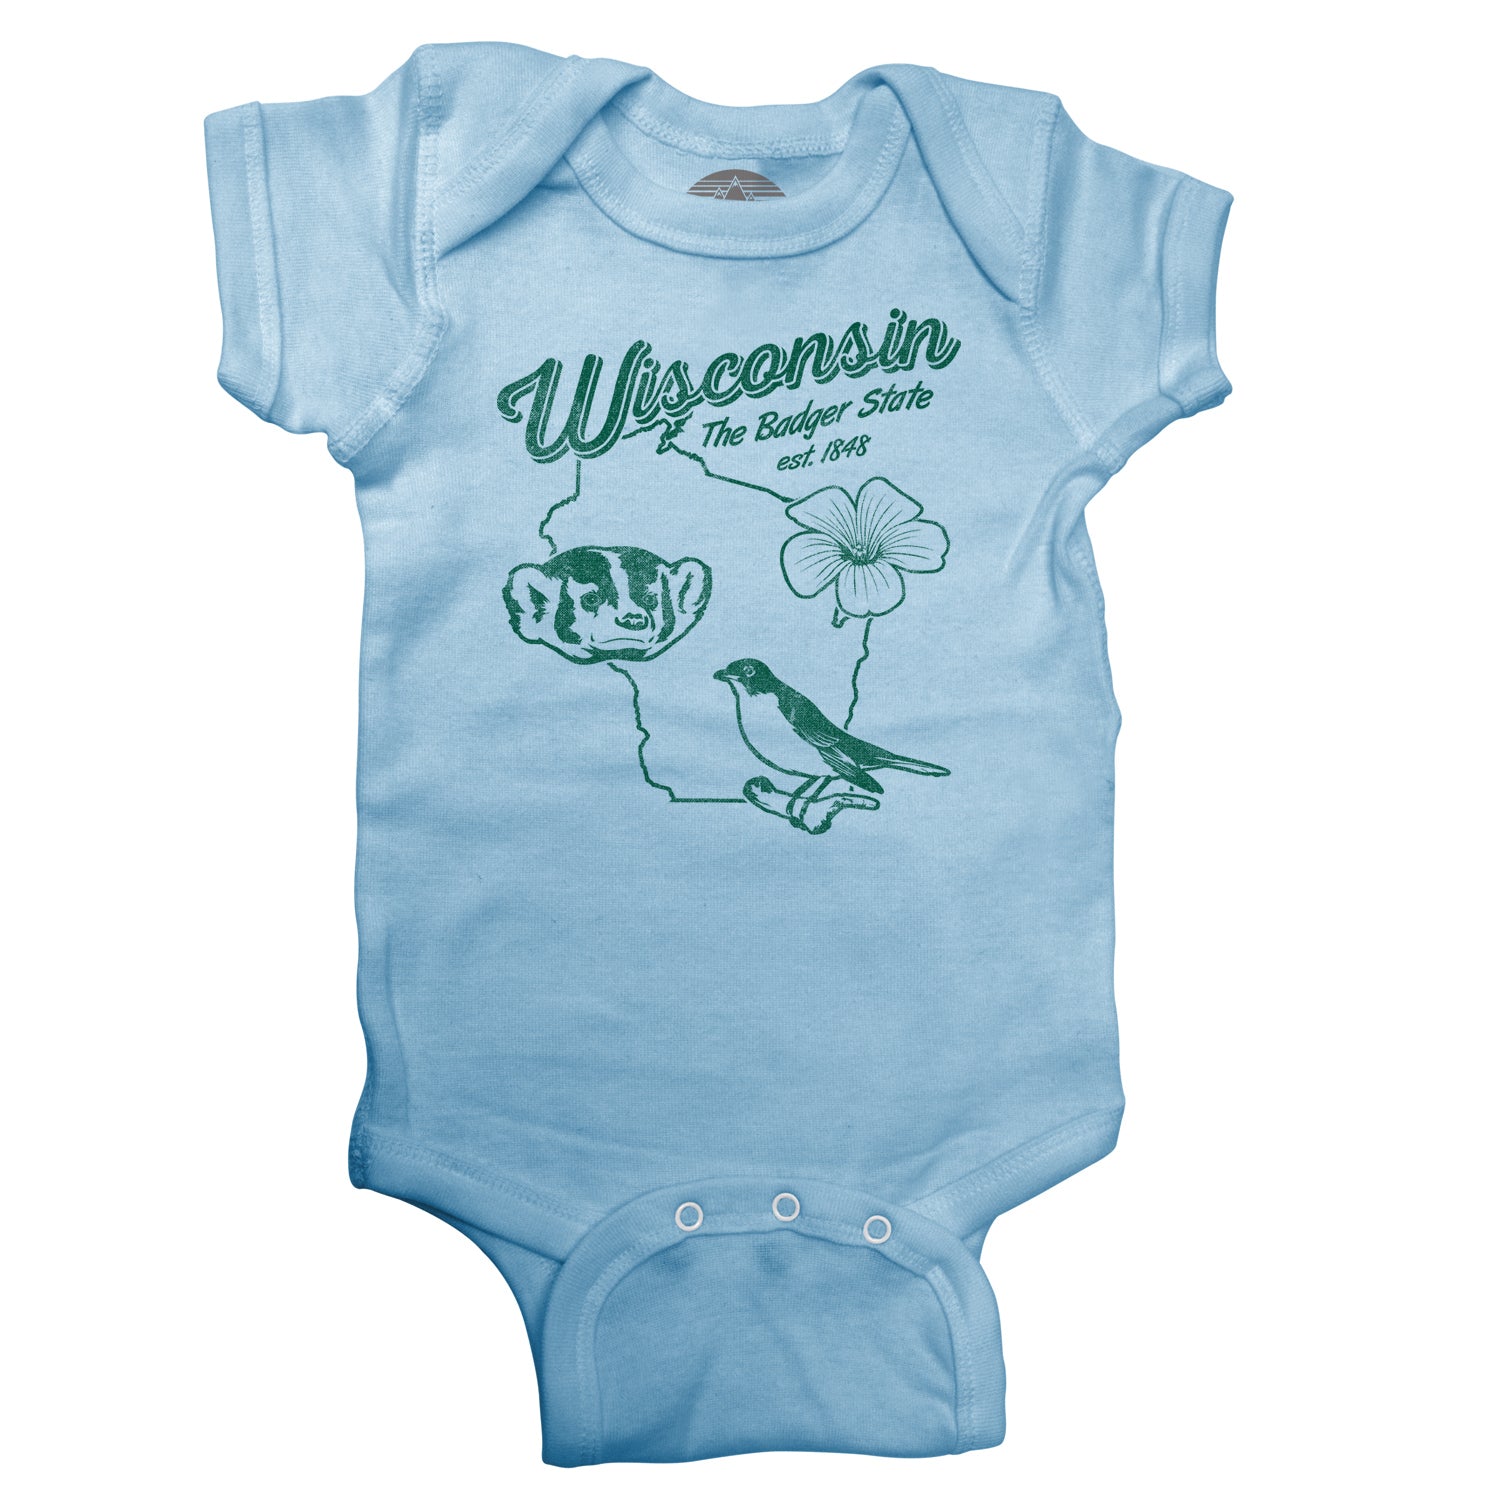 Vintage Wisconsin State Infant Bodysuit - Unisex Fit